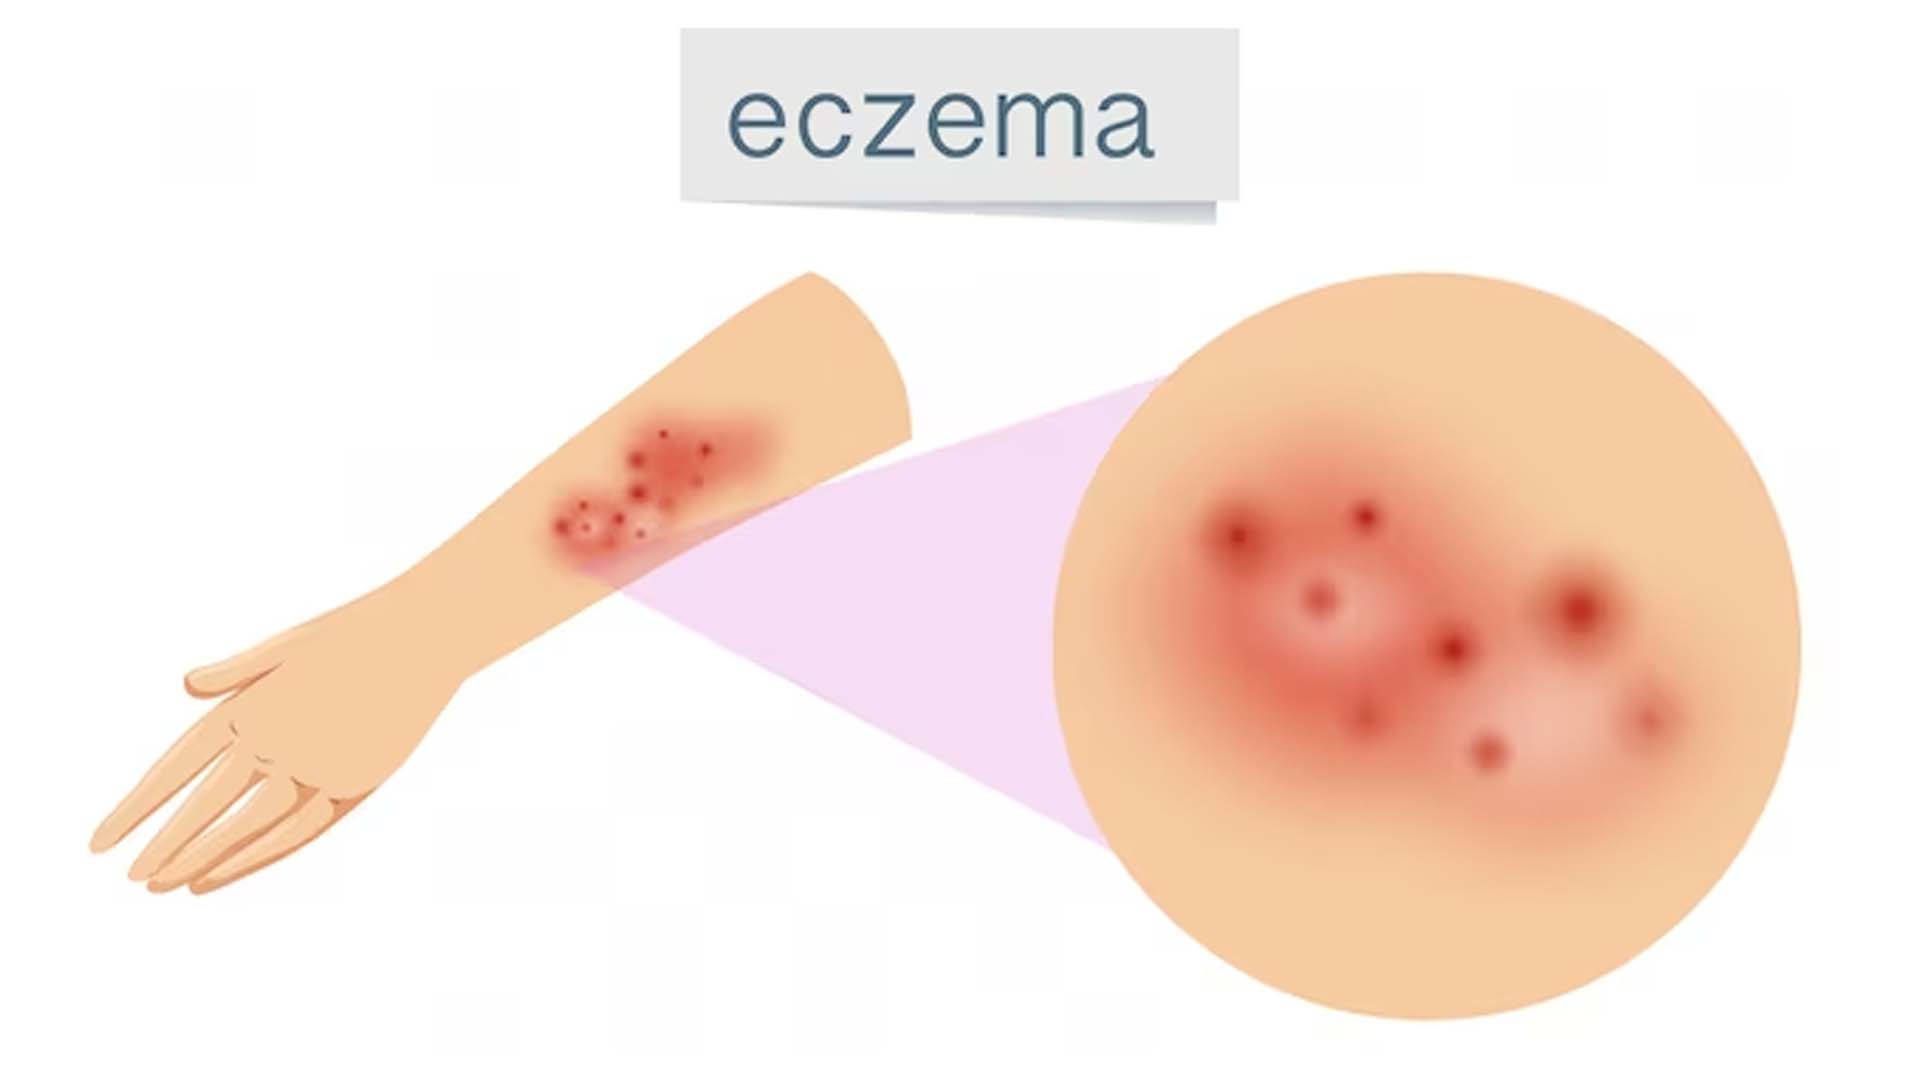 Eczema or Atopic dermatitis